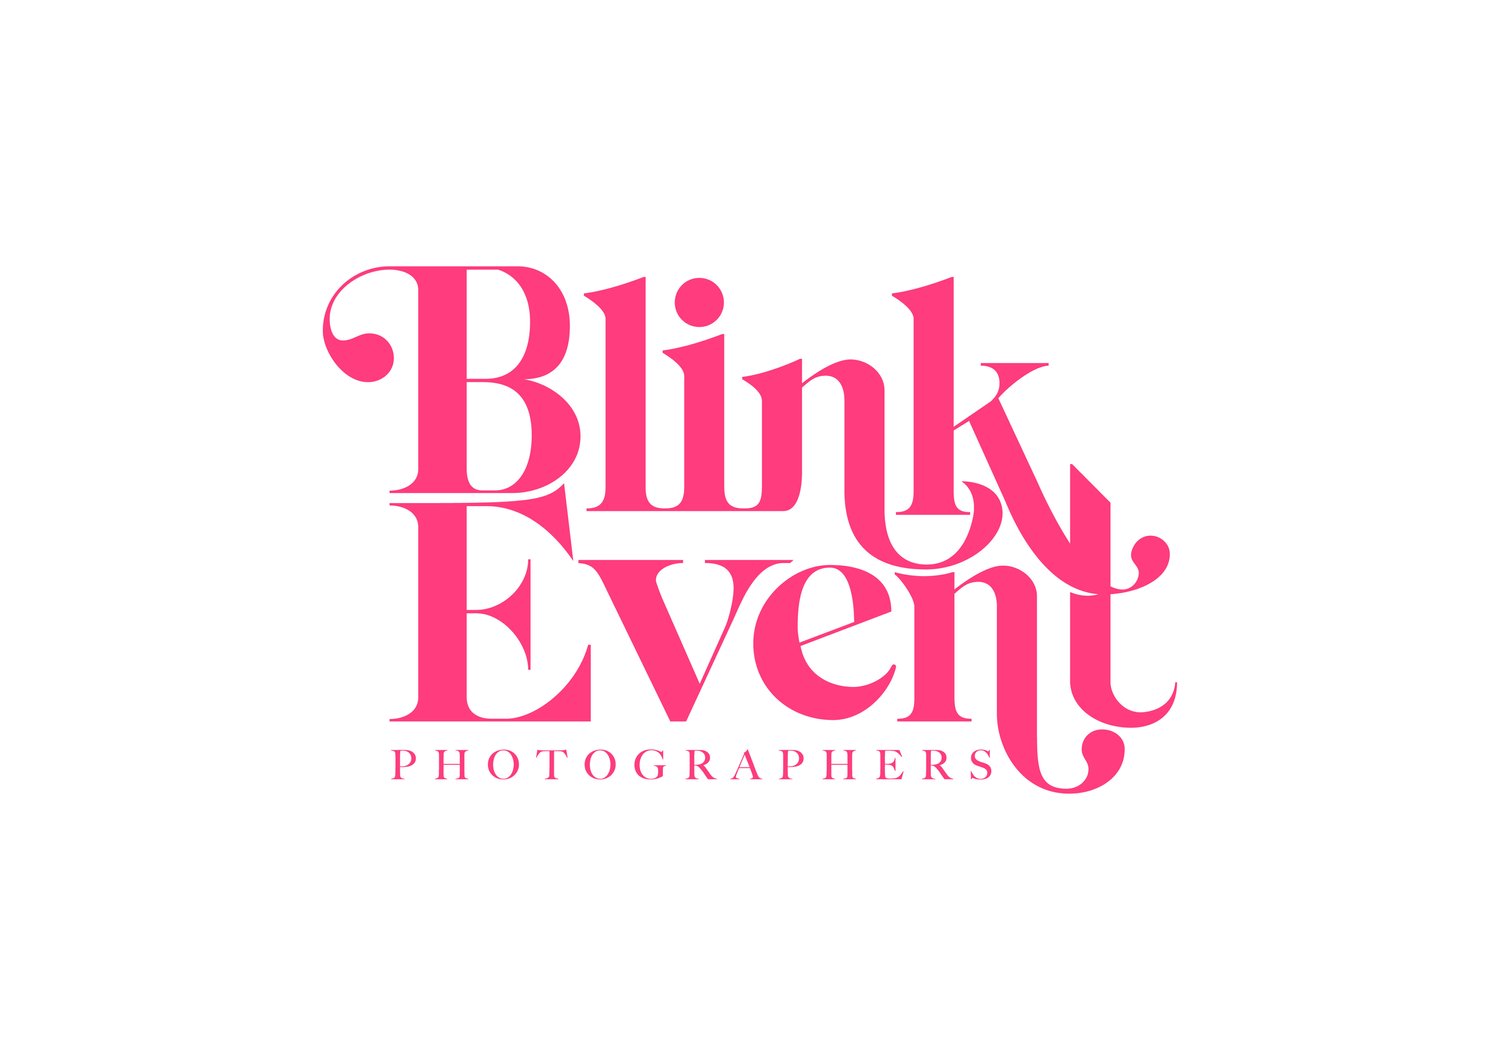 BLINK EVENT PHOTOGRAPHERS